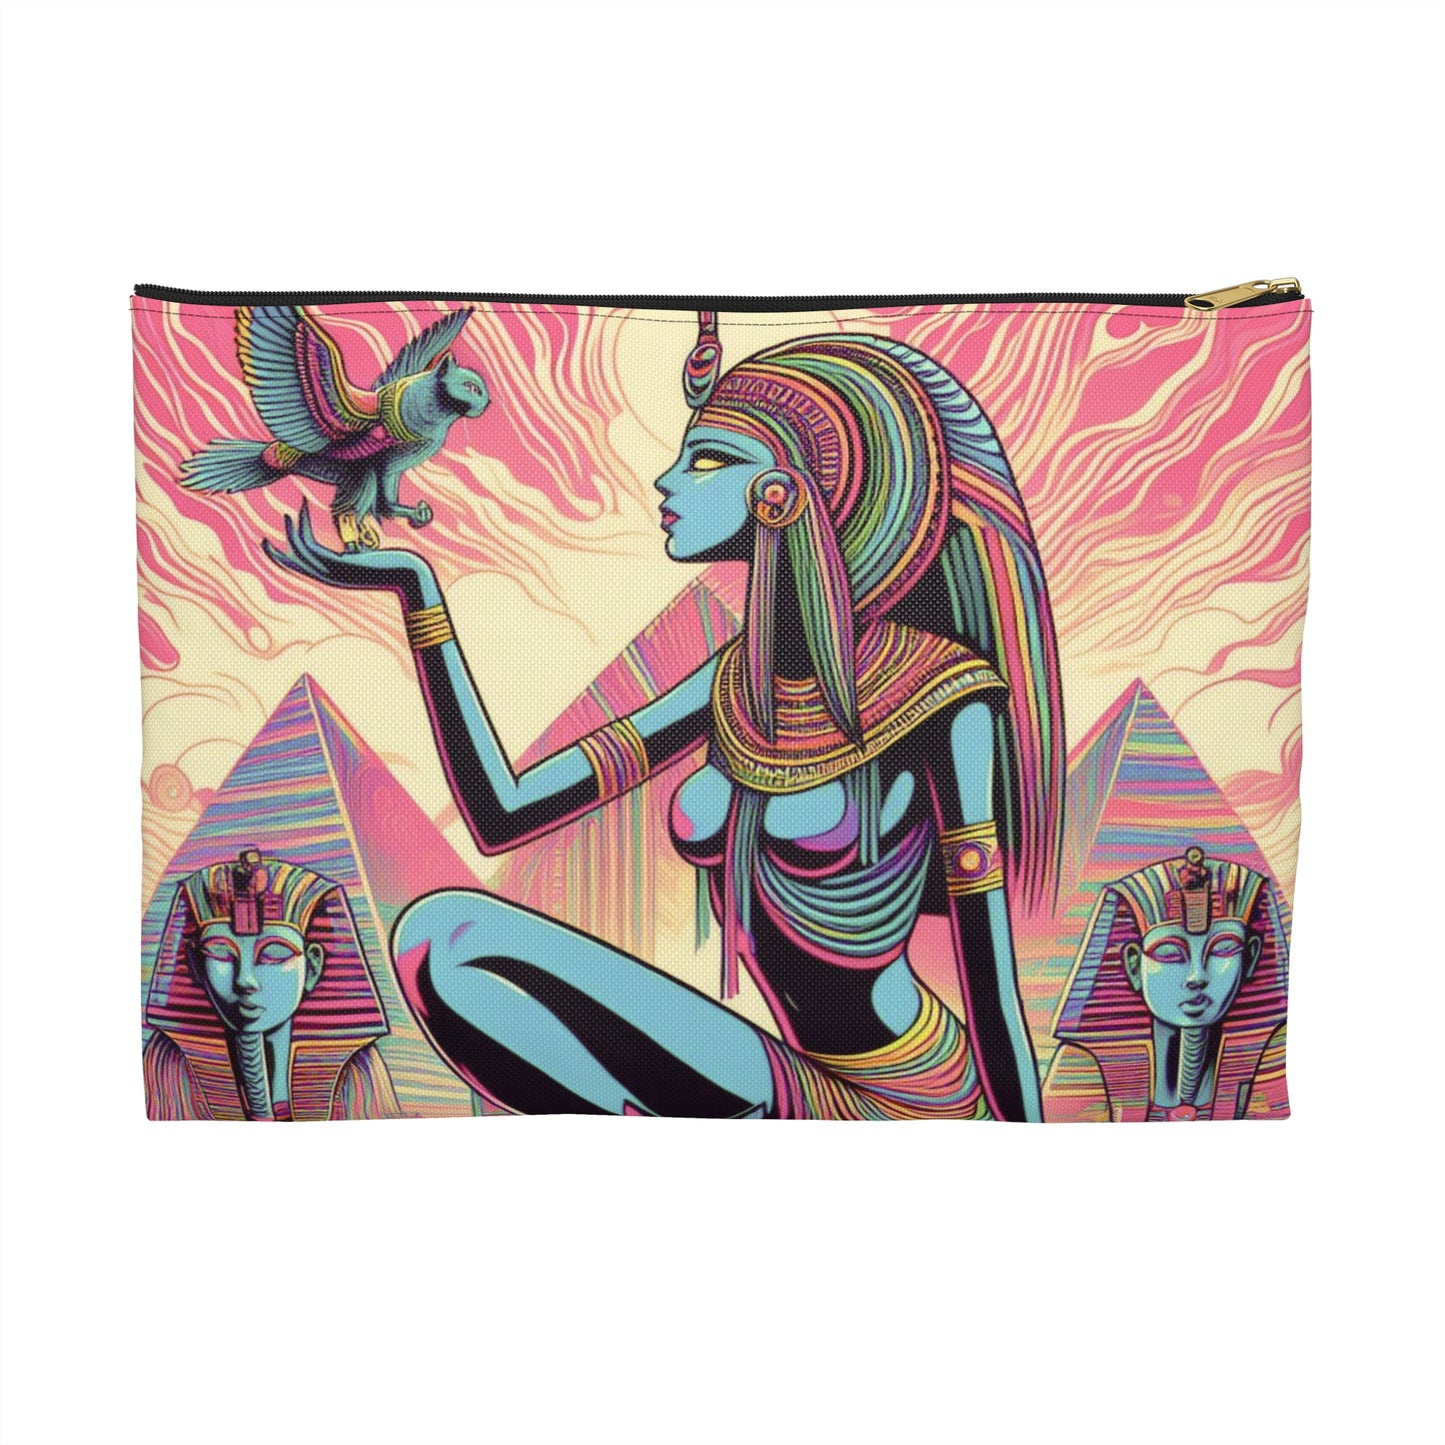 Egyptian Goddess Accessory Pouch: Everyday Bag, On-the-go Items